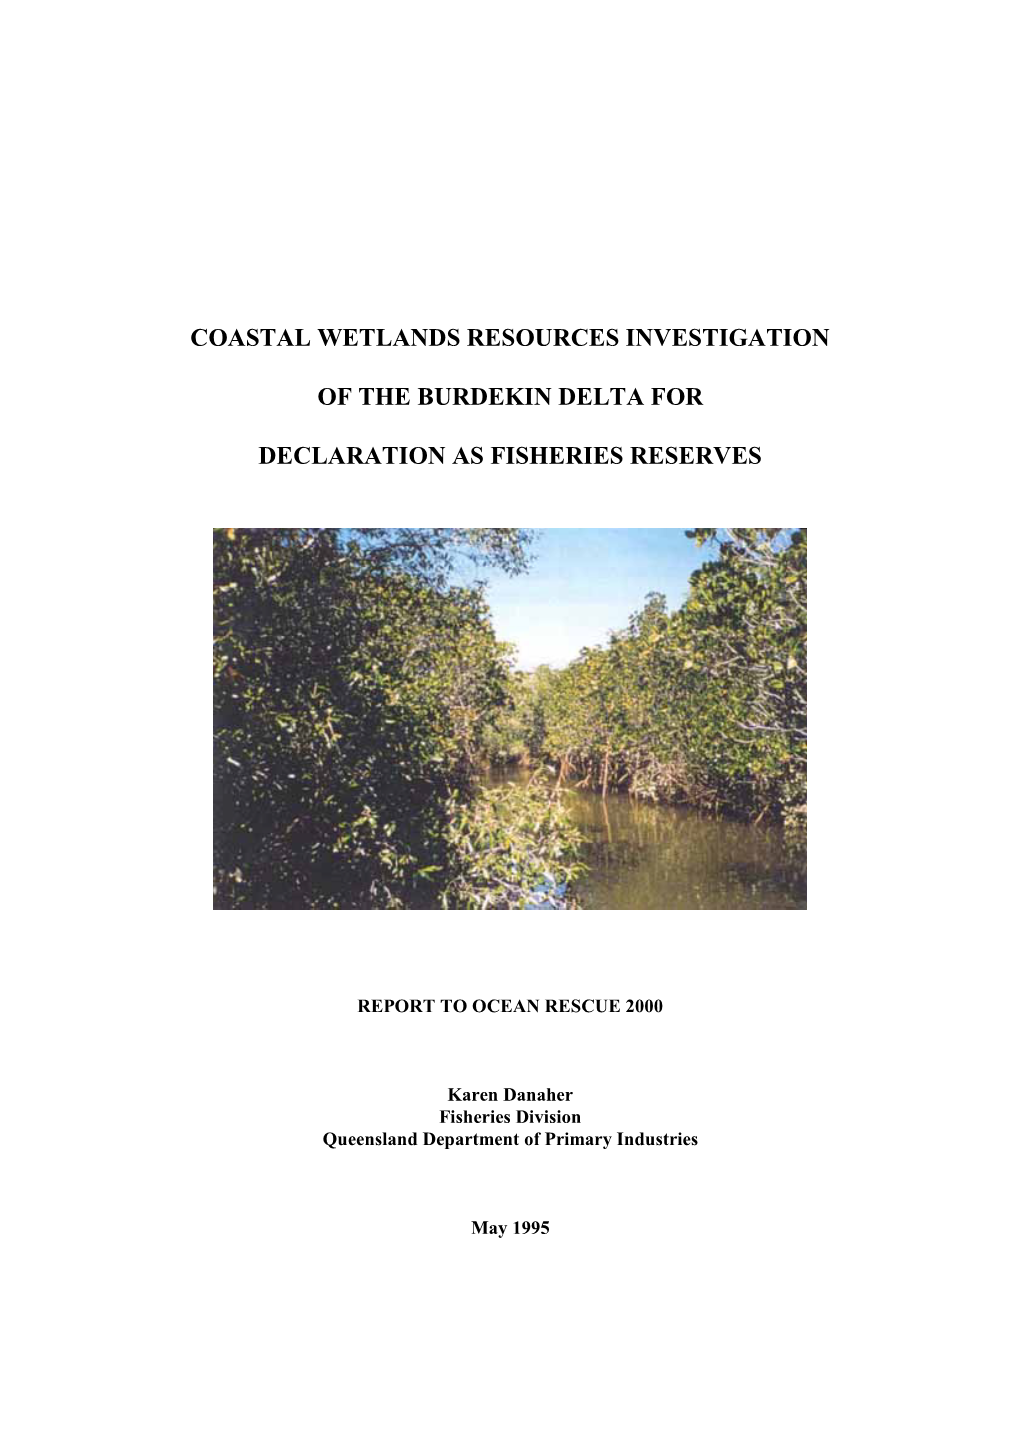 Coastal Wetlands Resources Investigation of the Burdekin Delta for Declaration As Fisheries Reserves